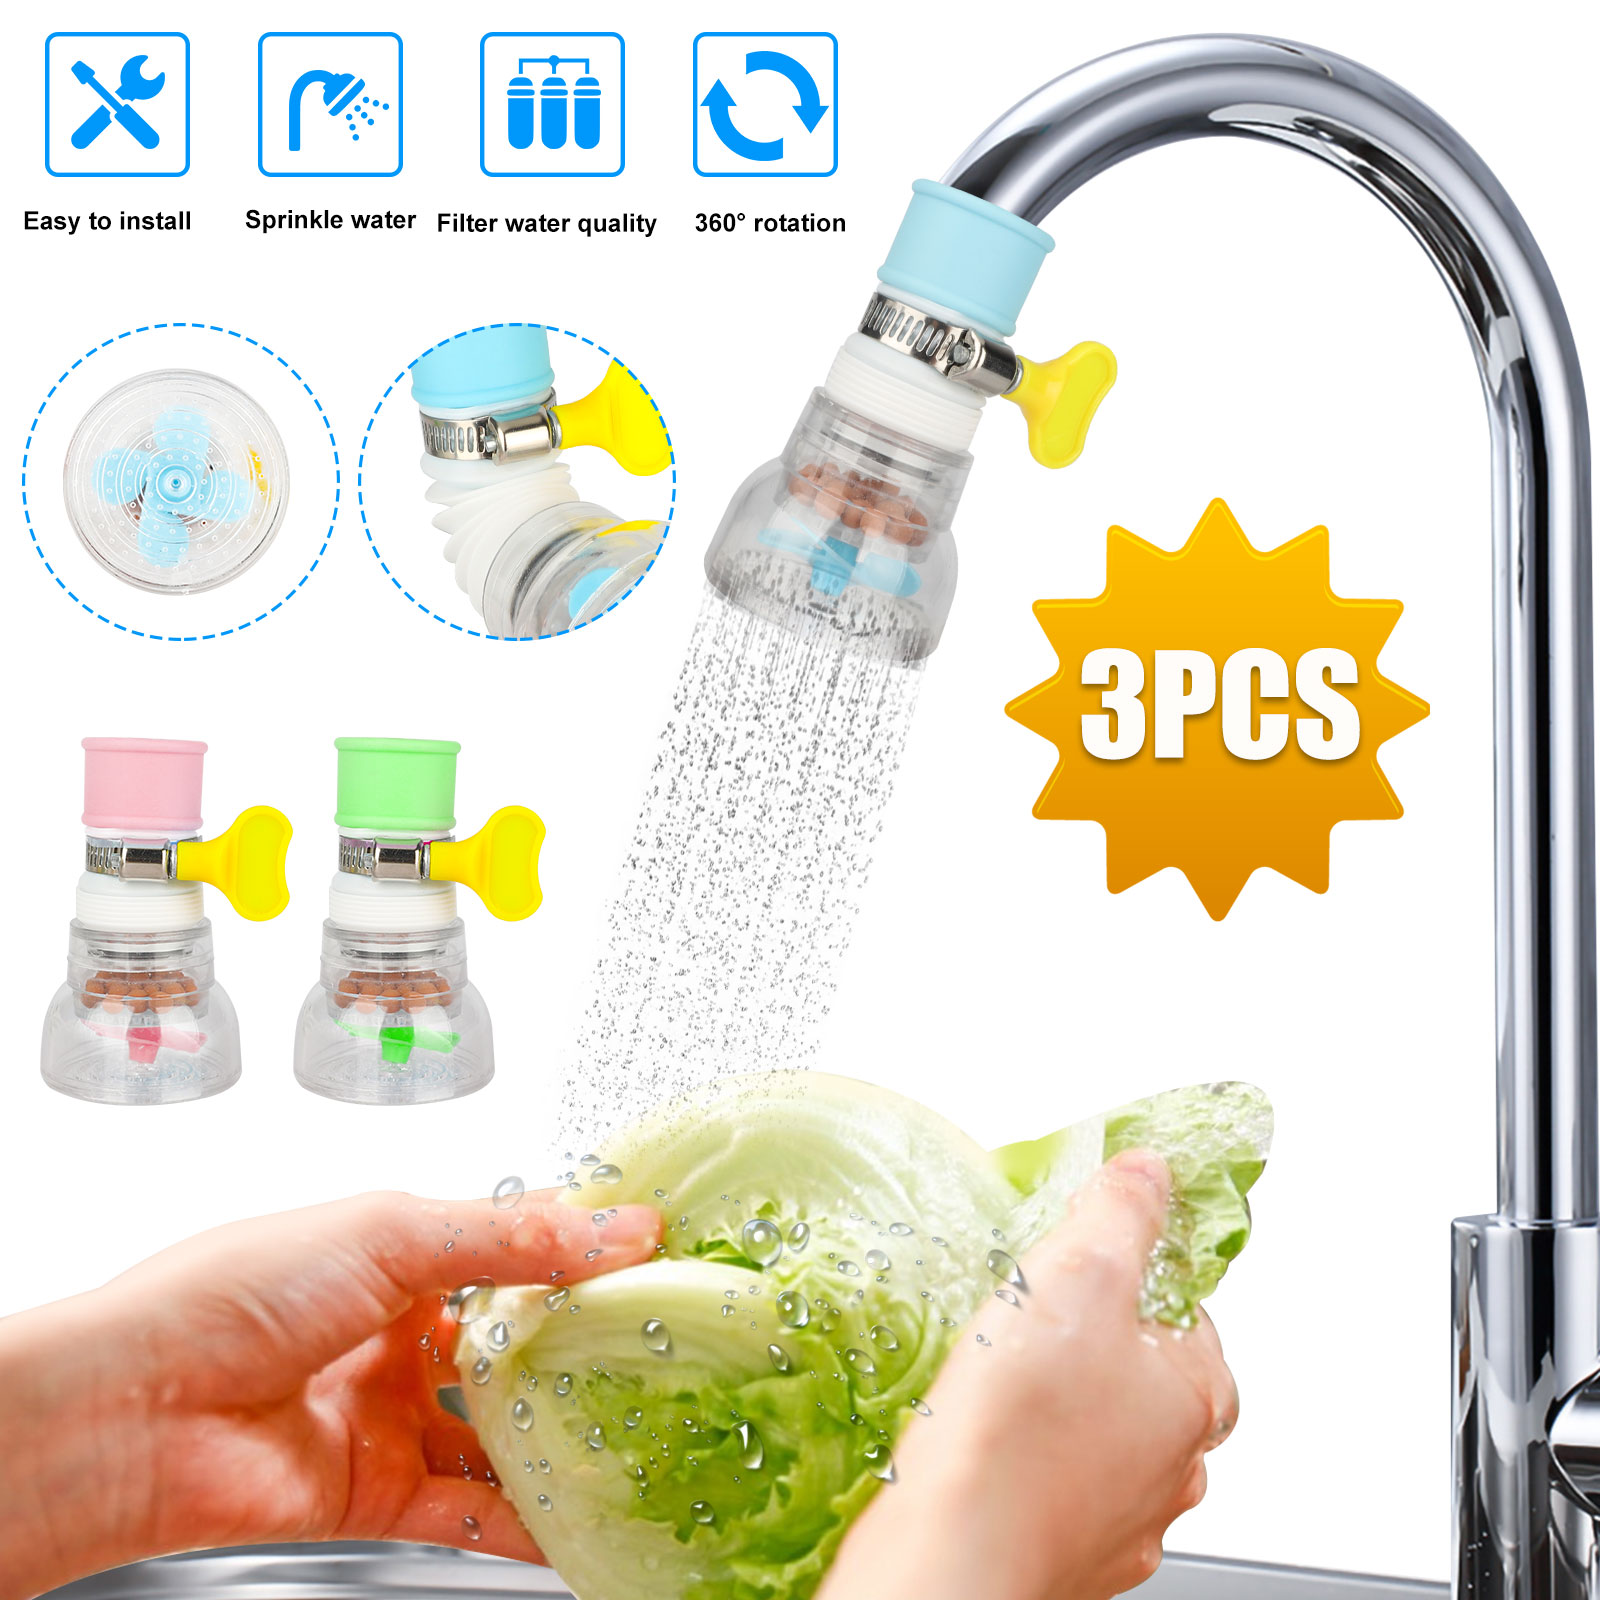 3Pcs Universal Faucet Mount Water Filters Kitchen Sink Filtr